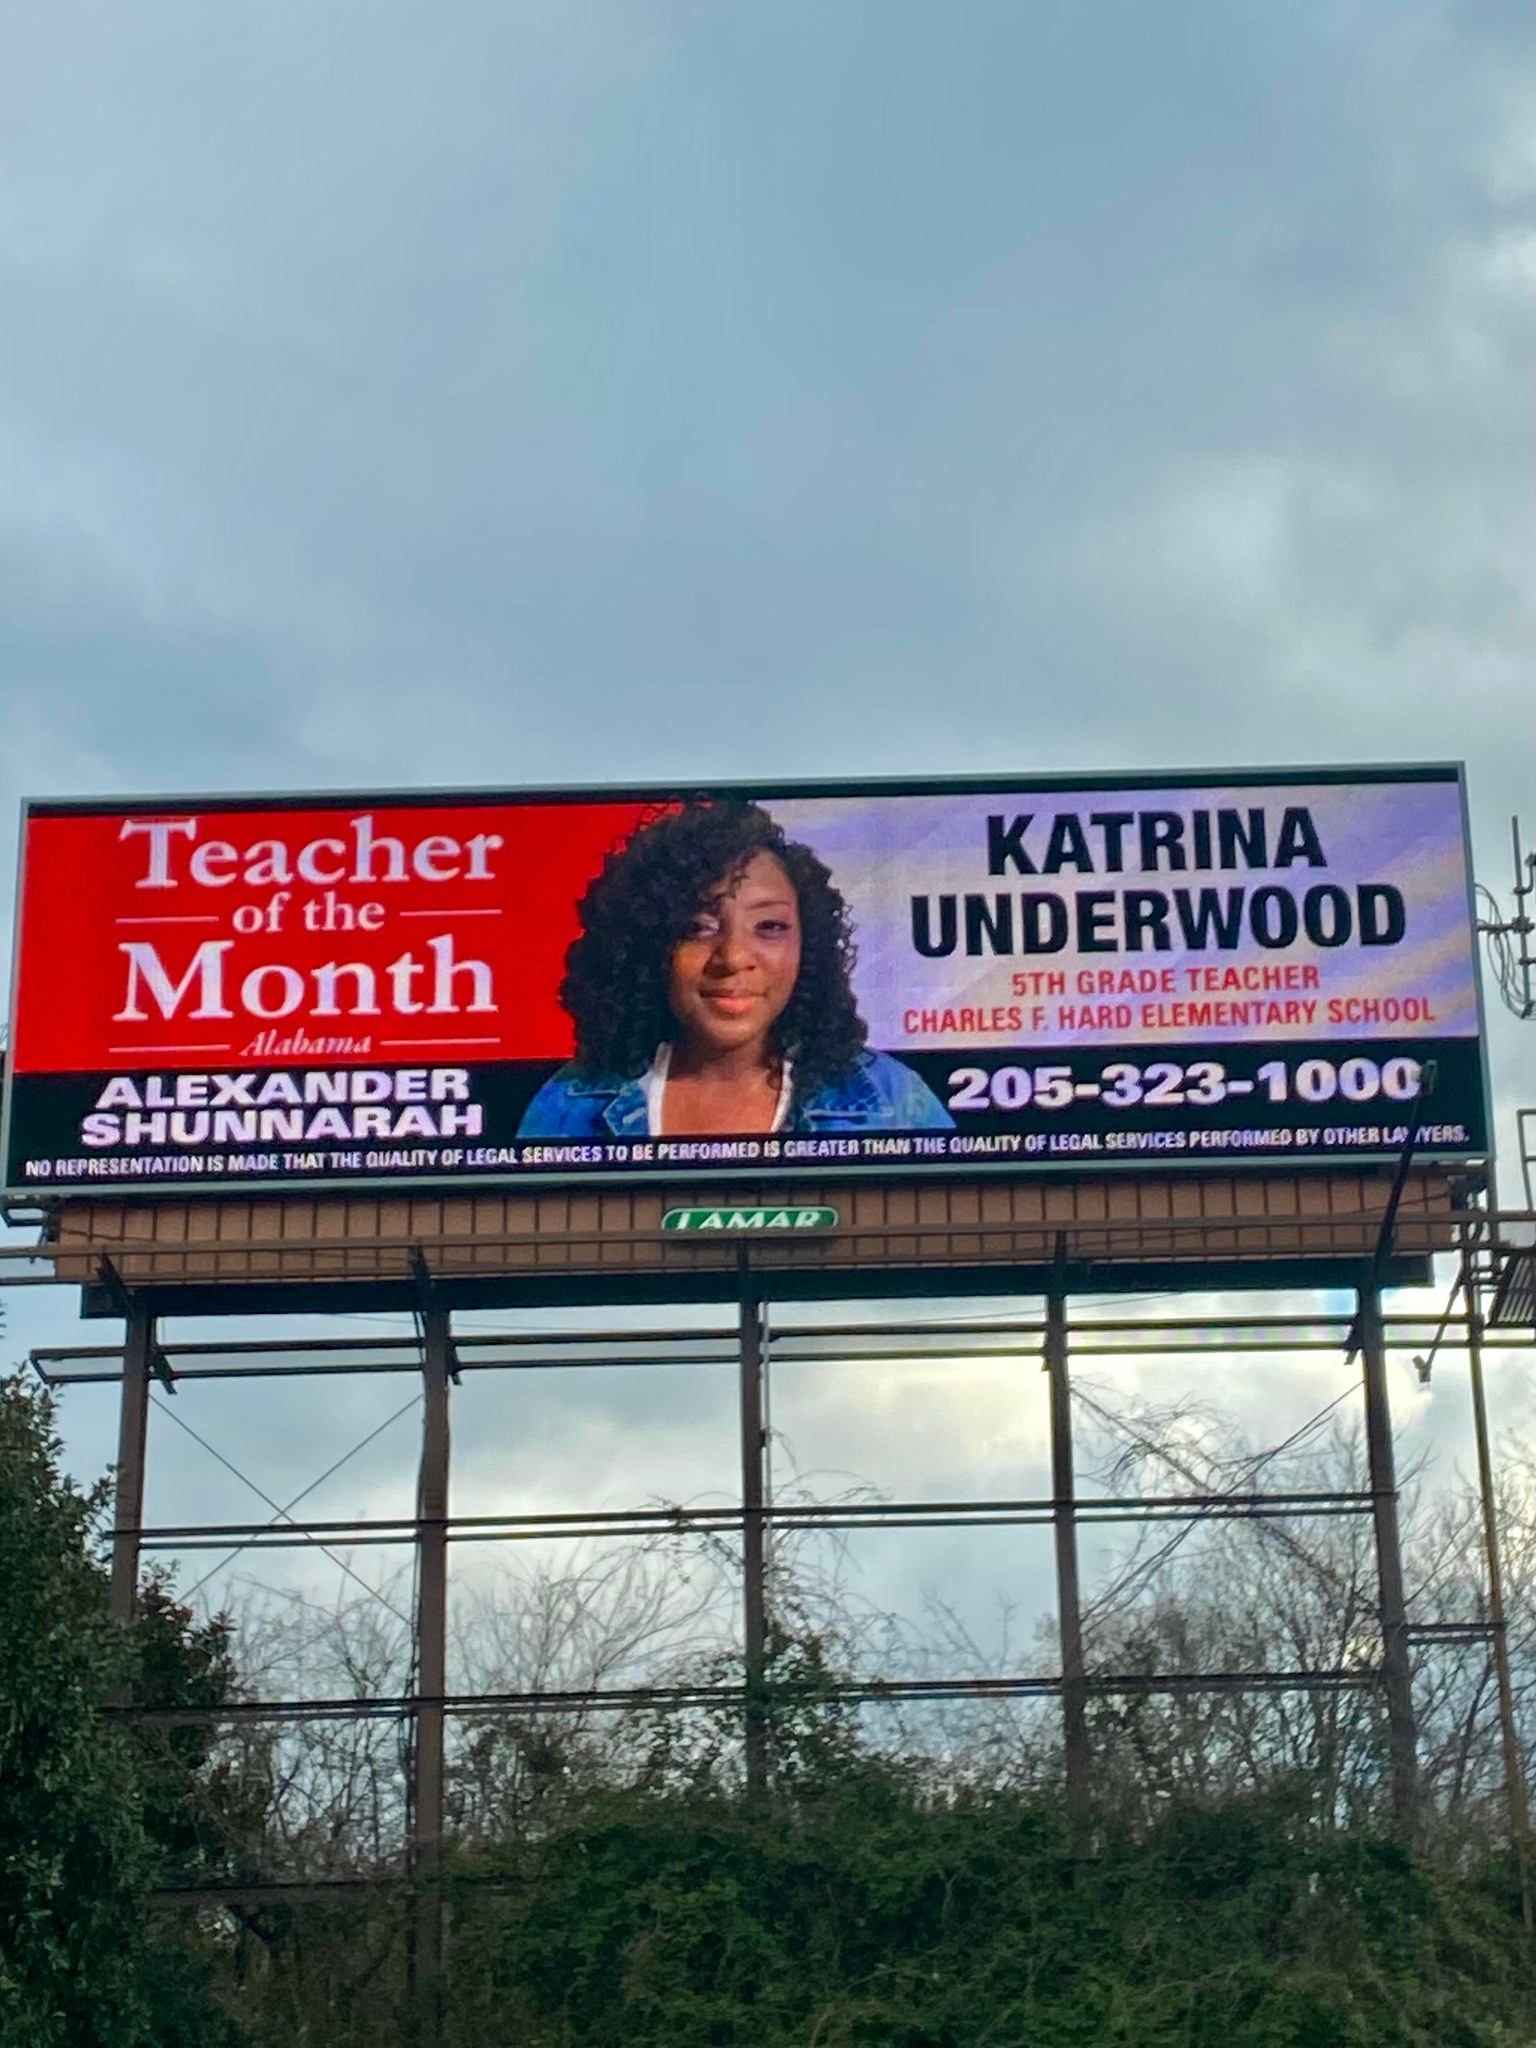 Katrina Underwood on an Alexander Shunnarah Billboard